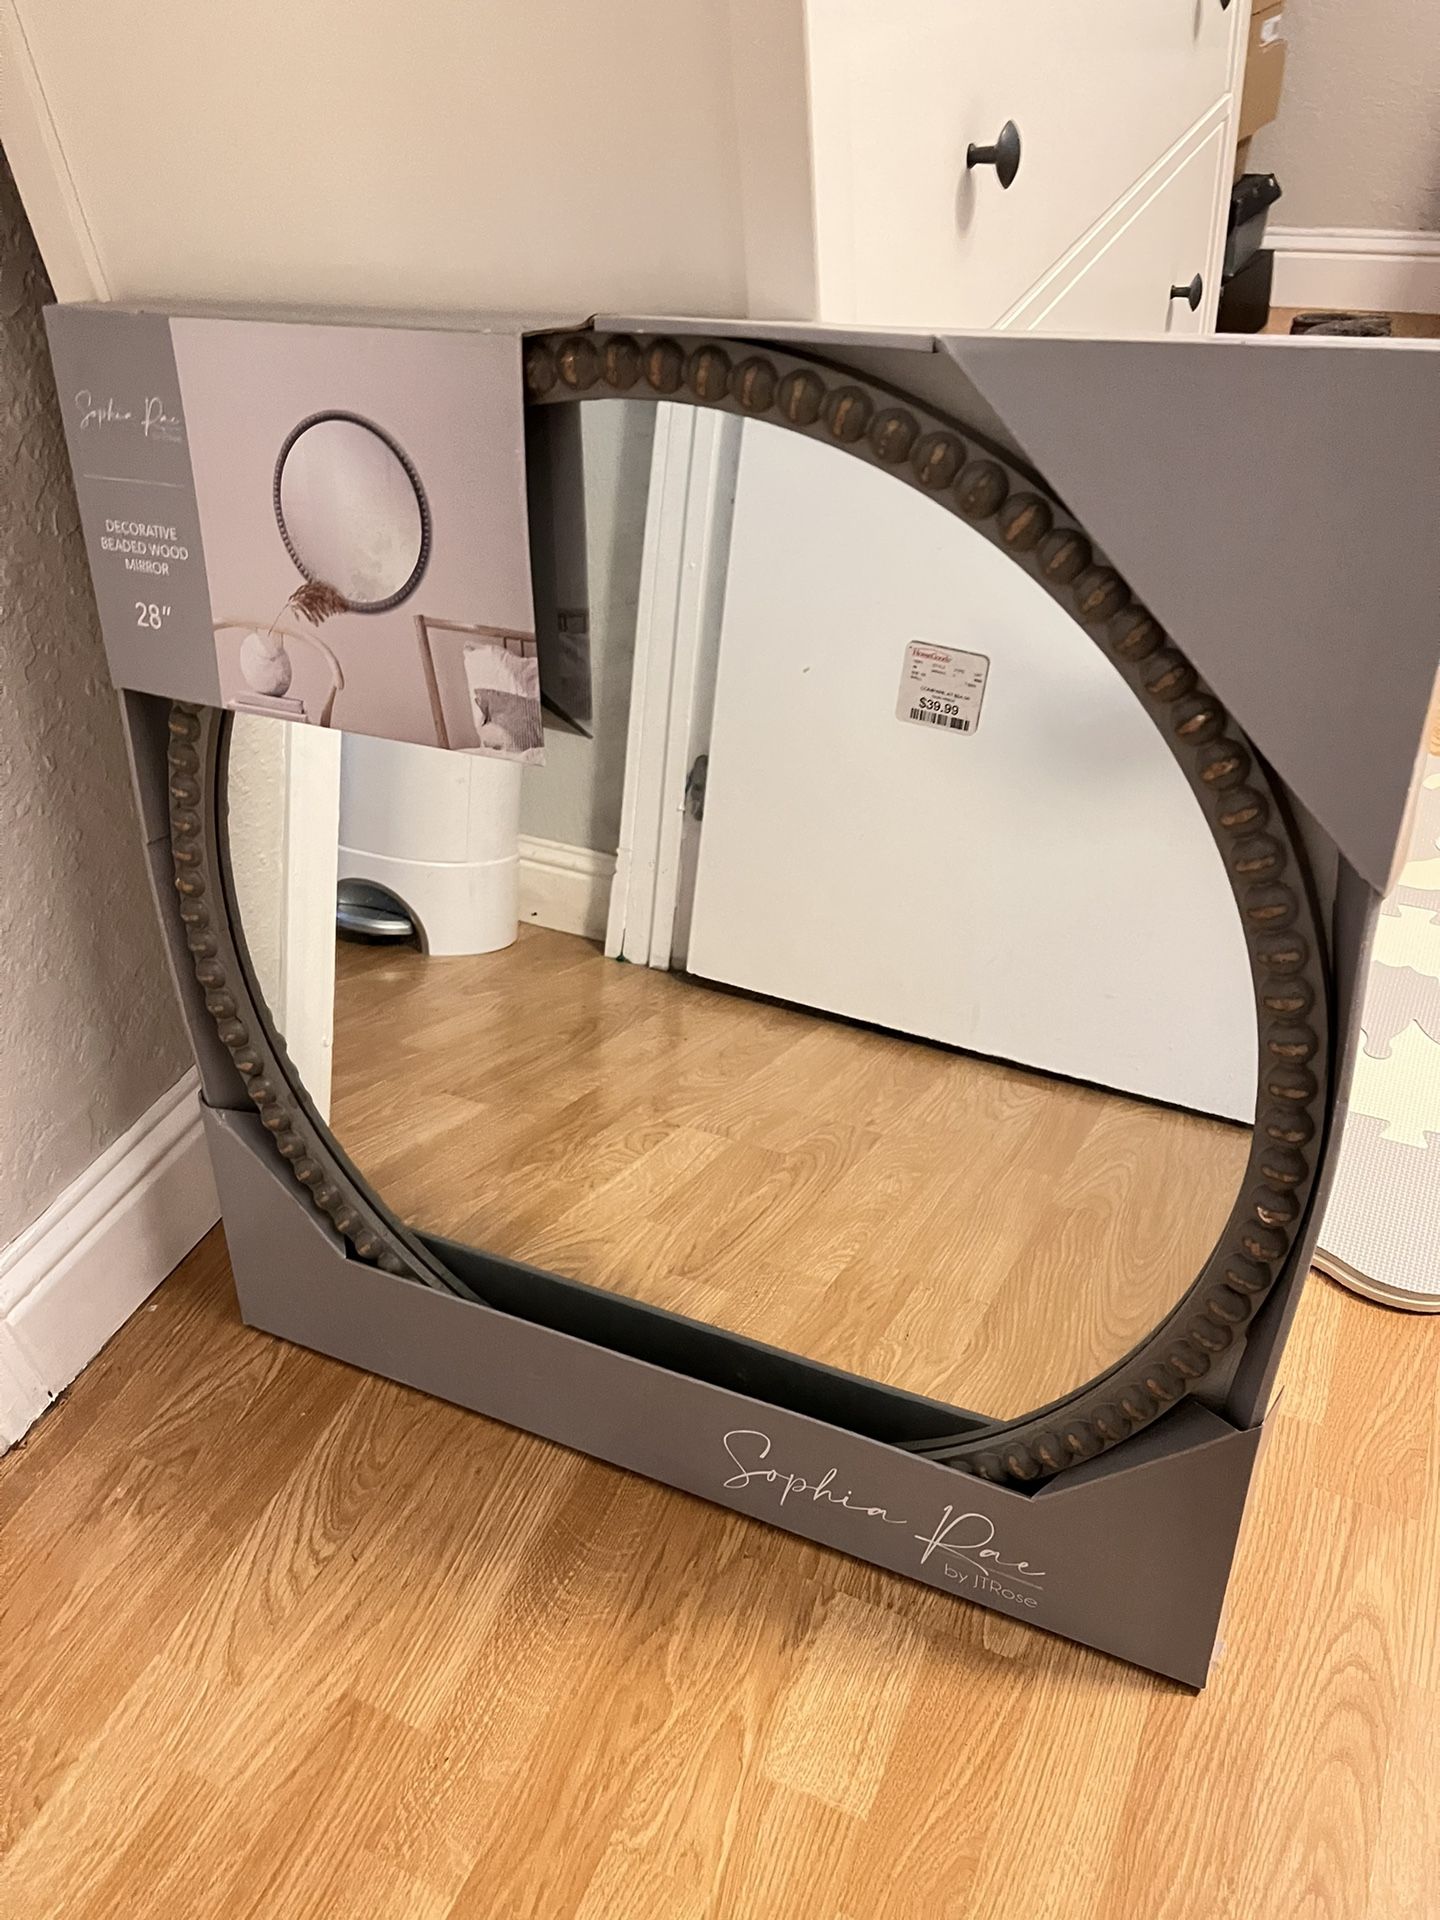 New Mirror 